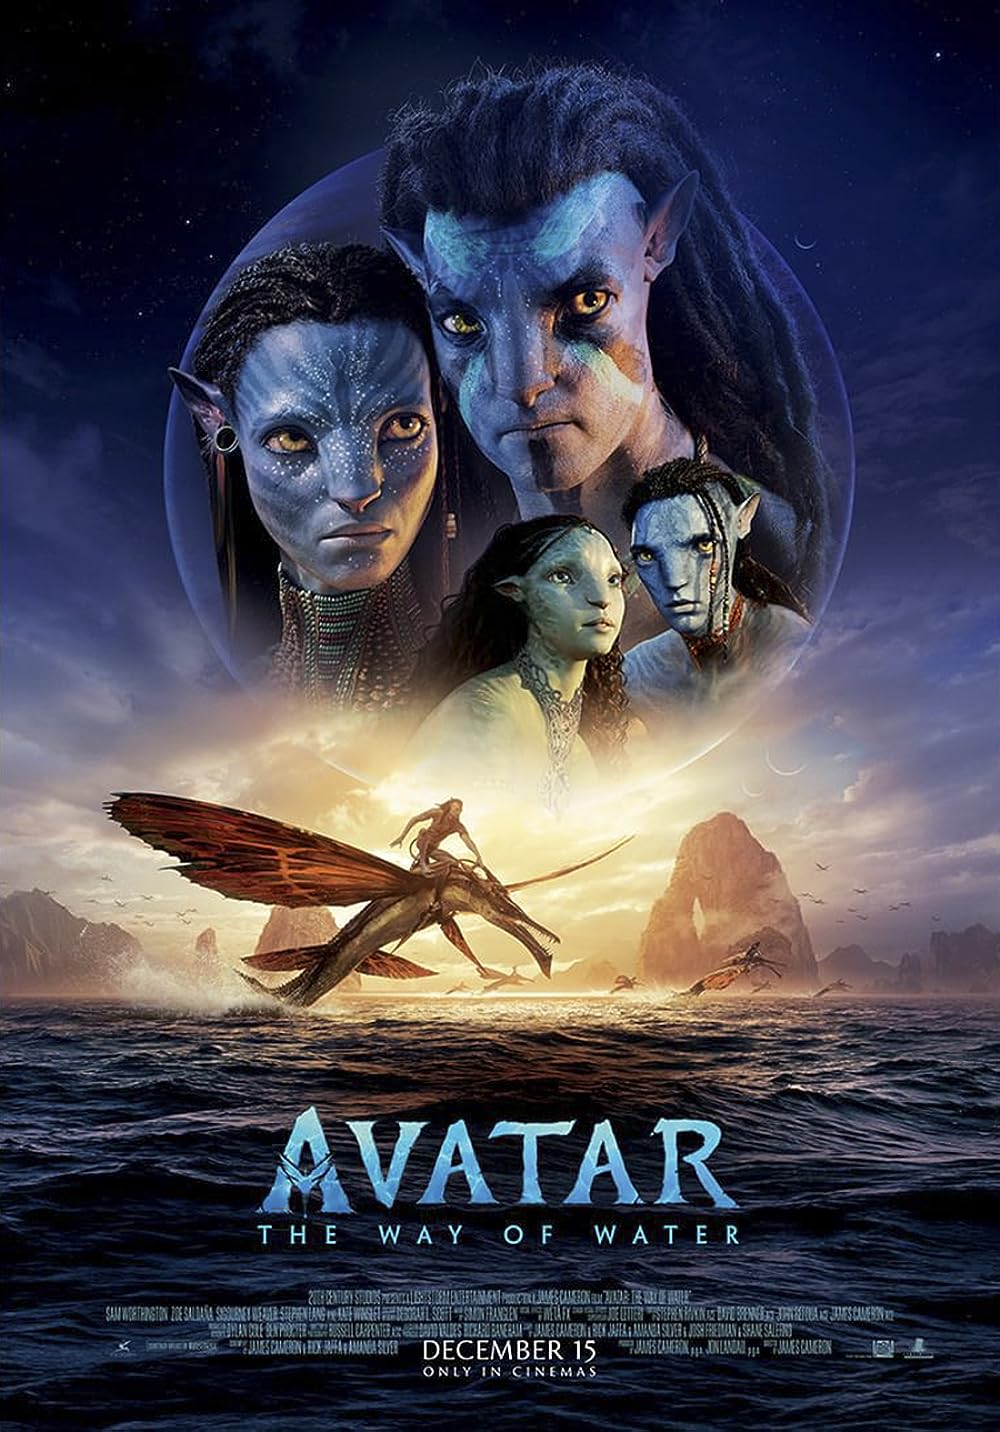 Stiahni si 3D Filmy Avatar: Cesta vody / Avatar: The Way of Water 3D (HSBS)(SK)(2022) = CSFD 80%